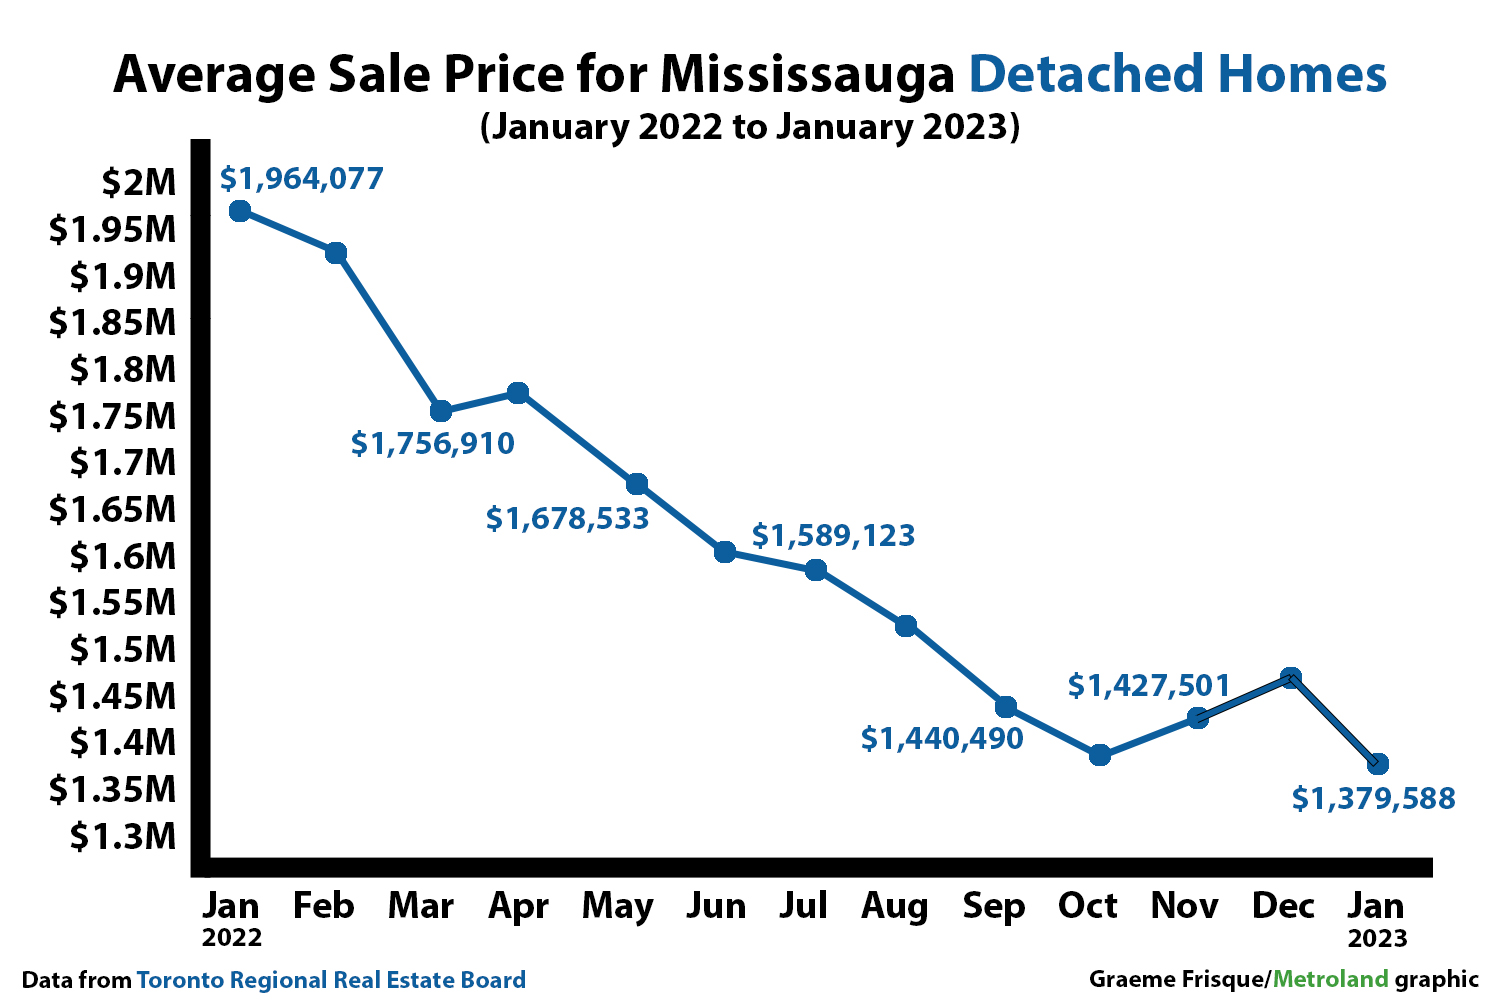 Mississauga detached price graph Jan. 2023